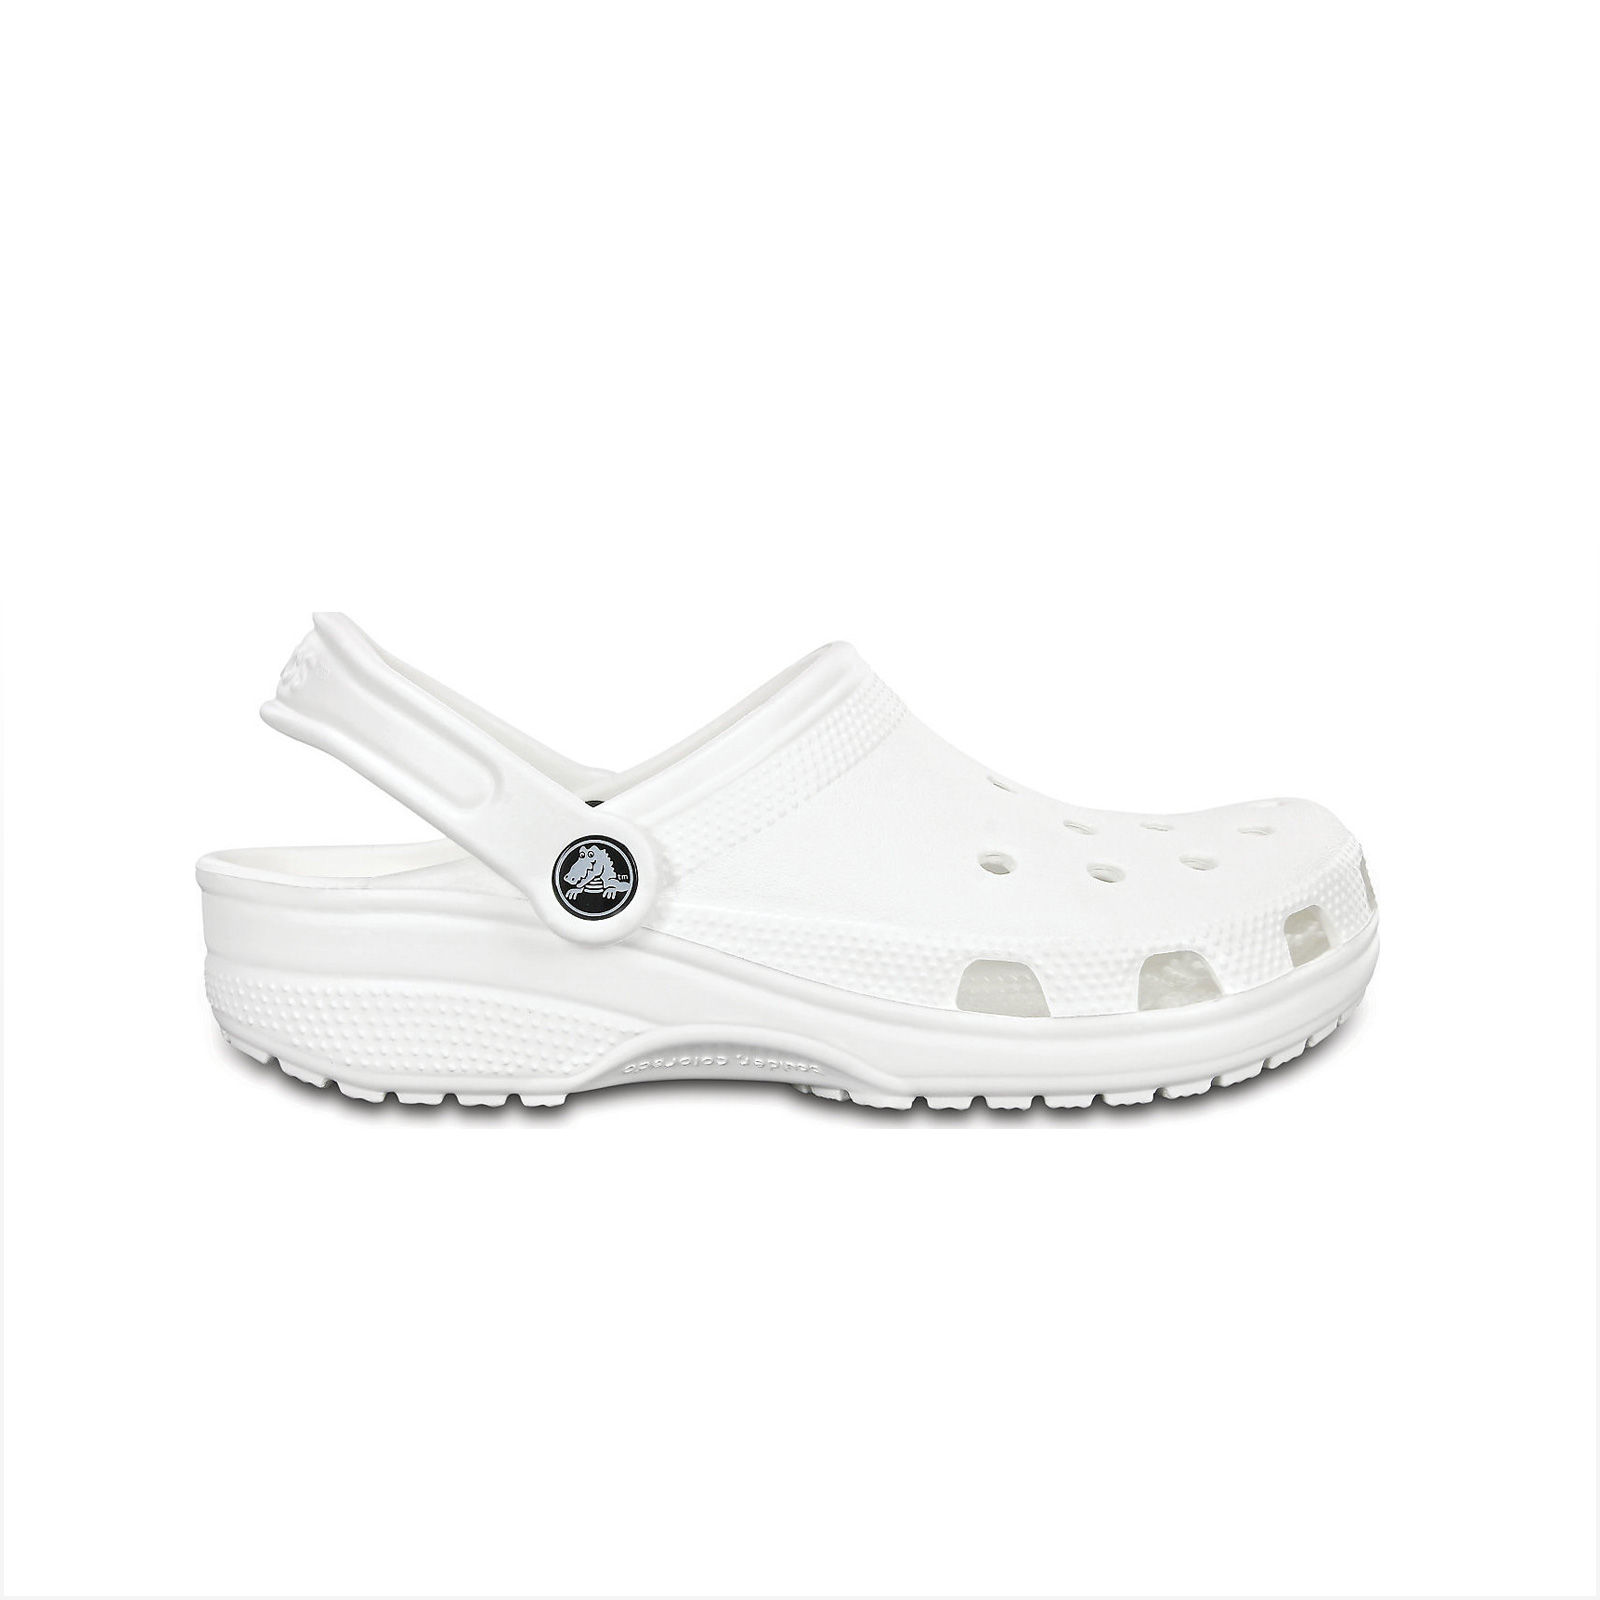 Crocs - CLΑSSΙC - WΗΙΤΕ Ανδρικά > Παπούτσια > Clogs > Glogs